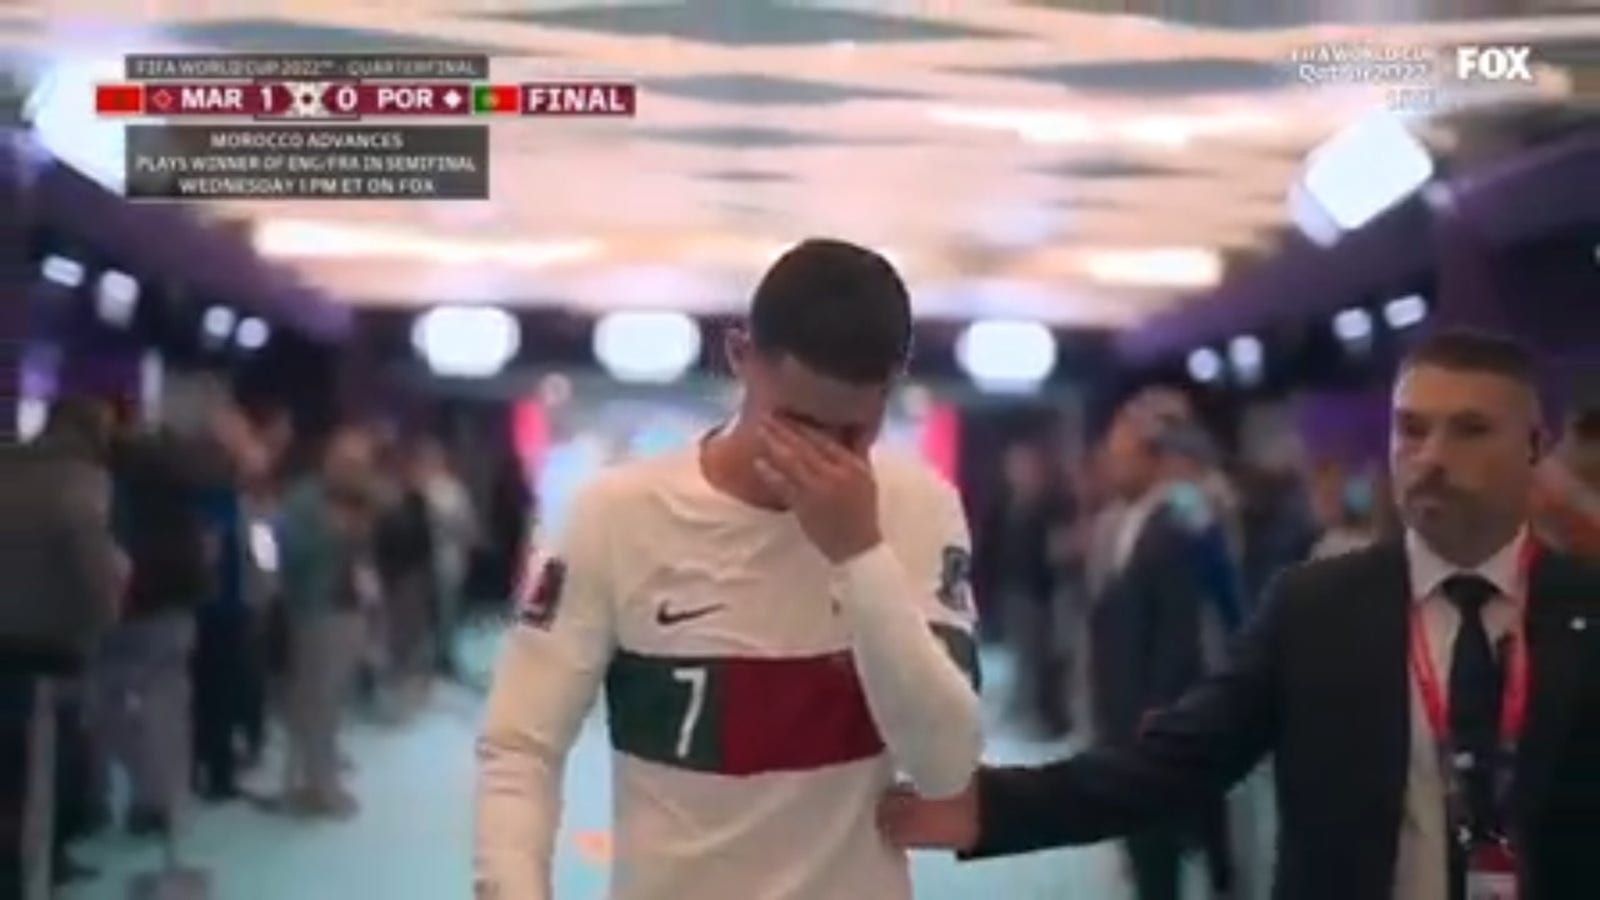 An emotional Cristiano Ronaldo left the stadium